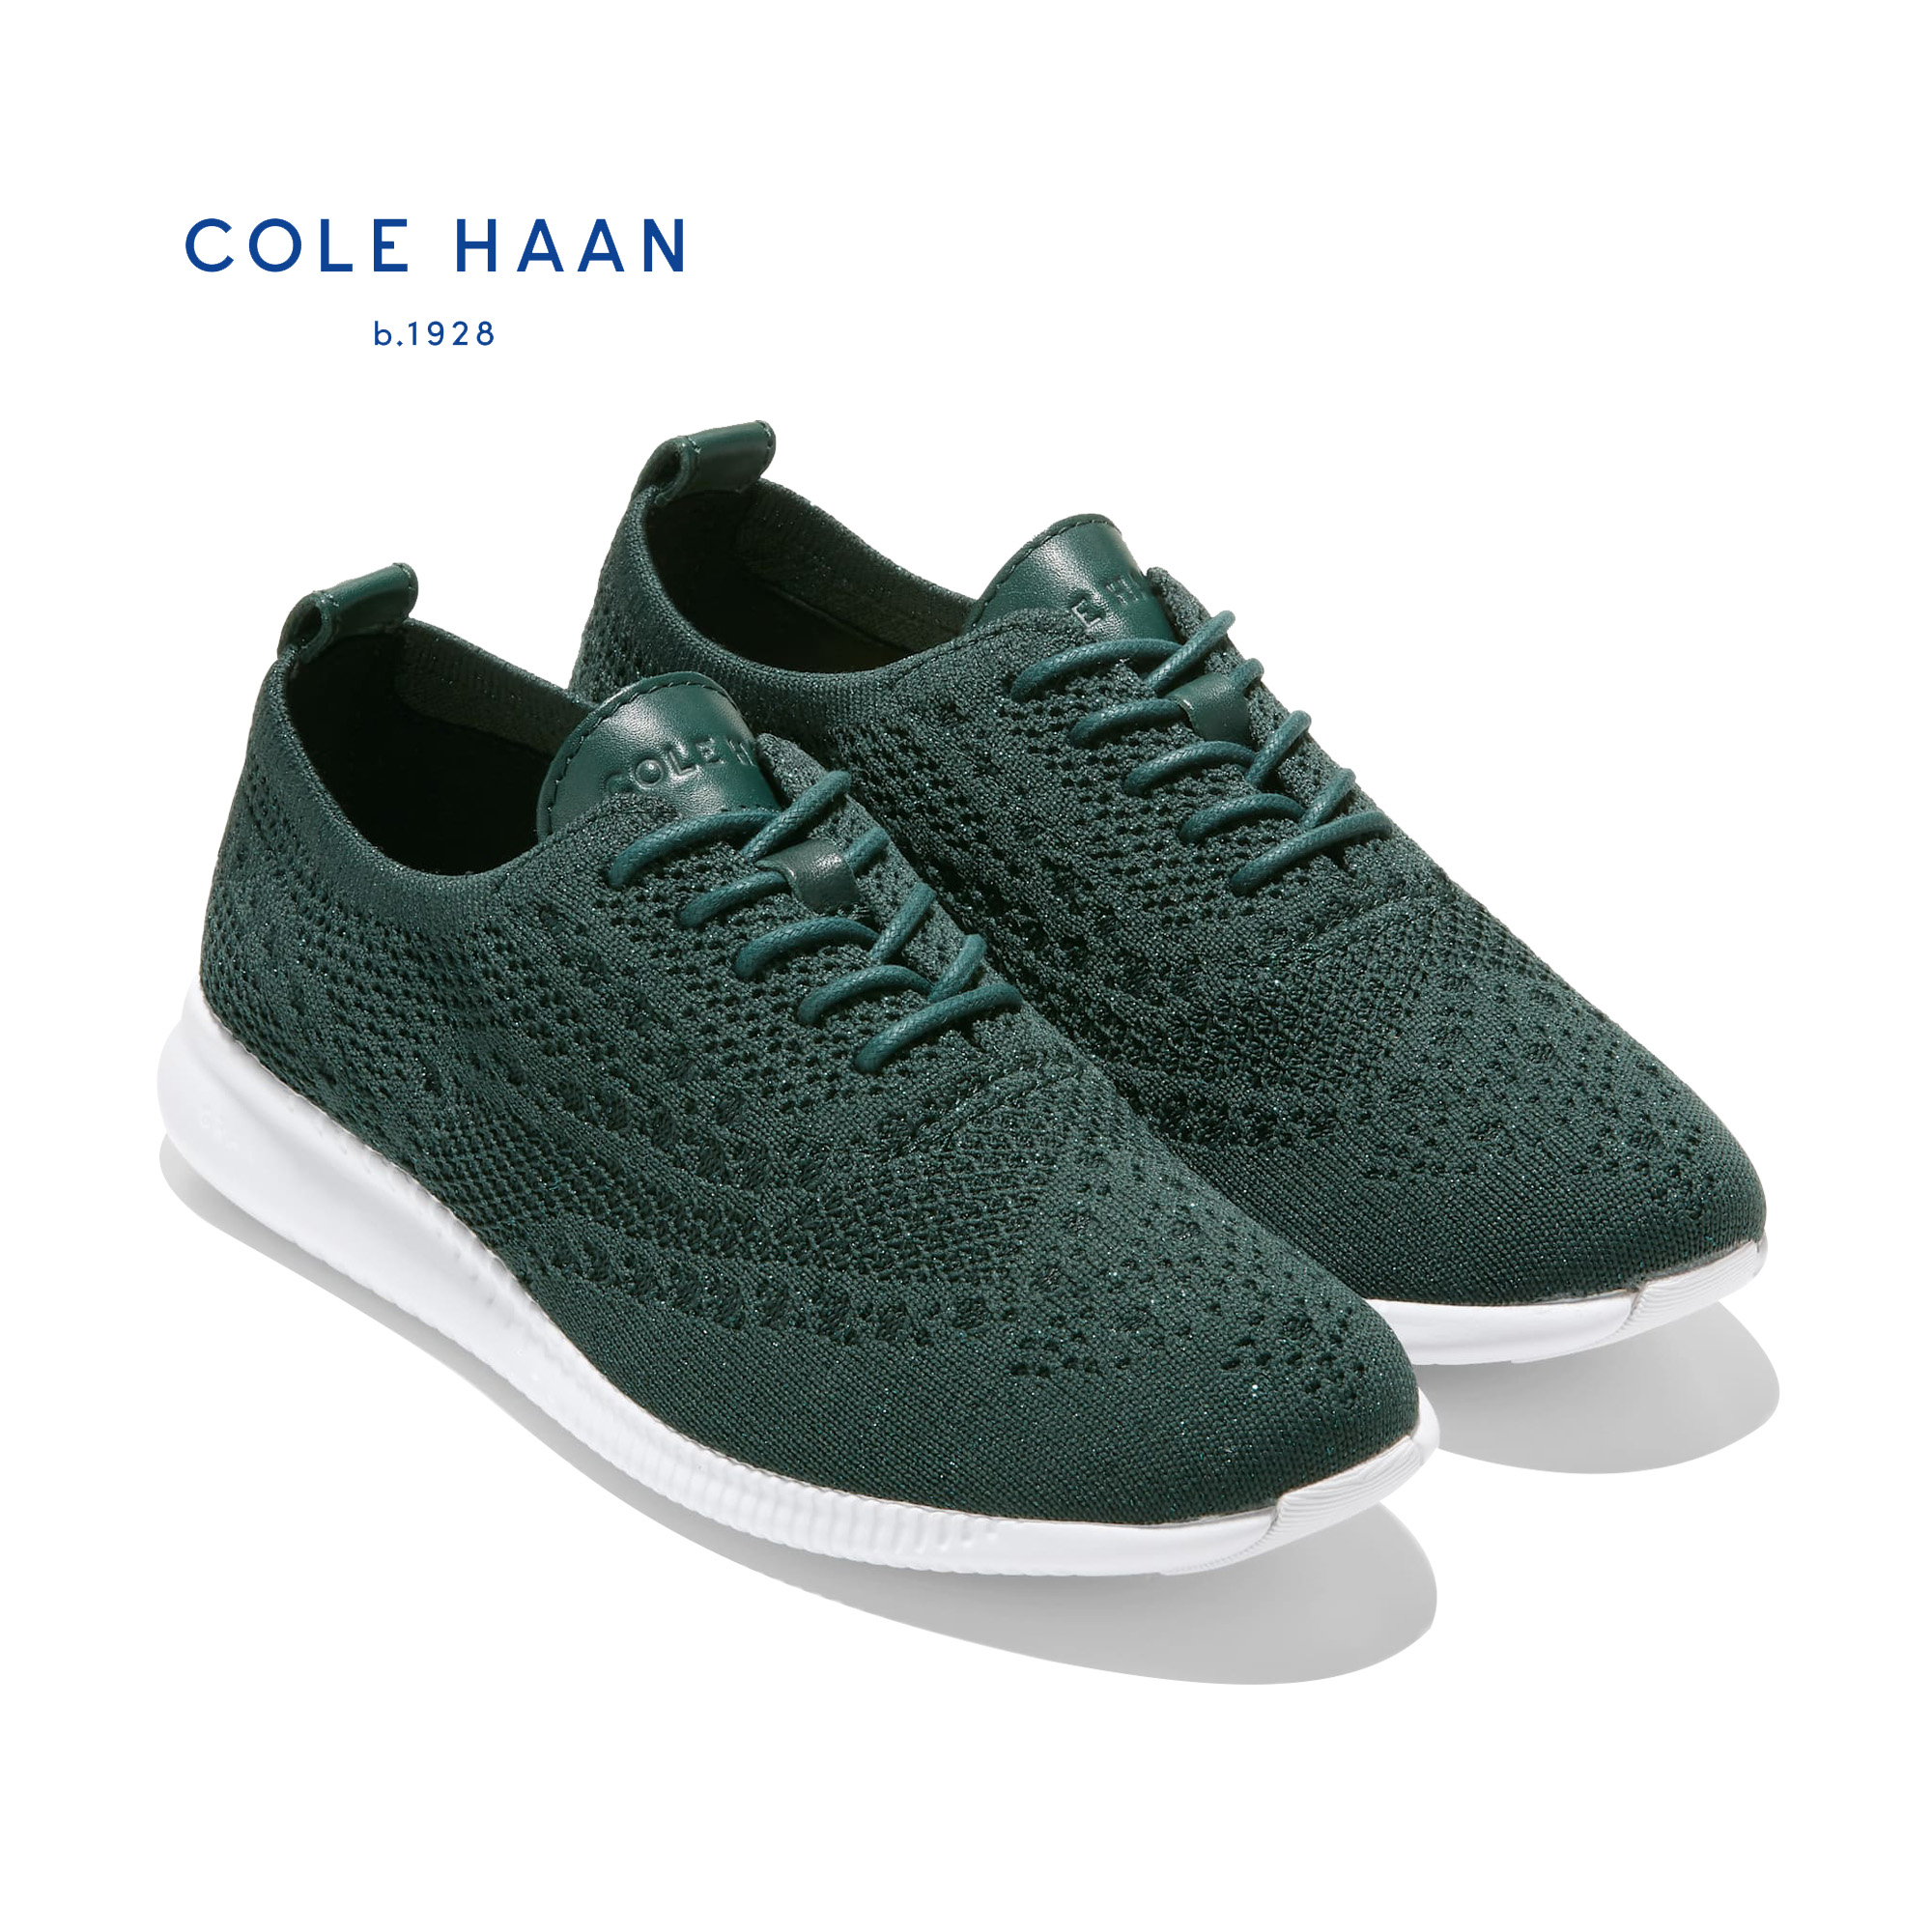 Cole Haan W28588 Women's 2.ZERØGRAND Wingtip Oxford Shoes